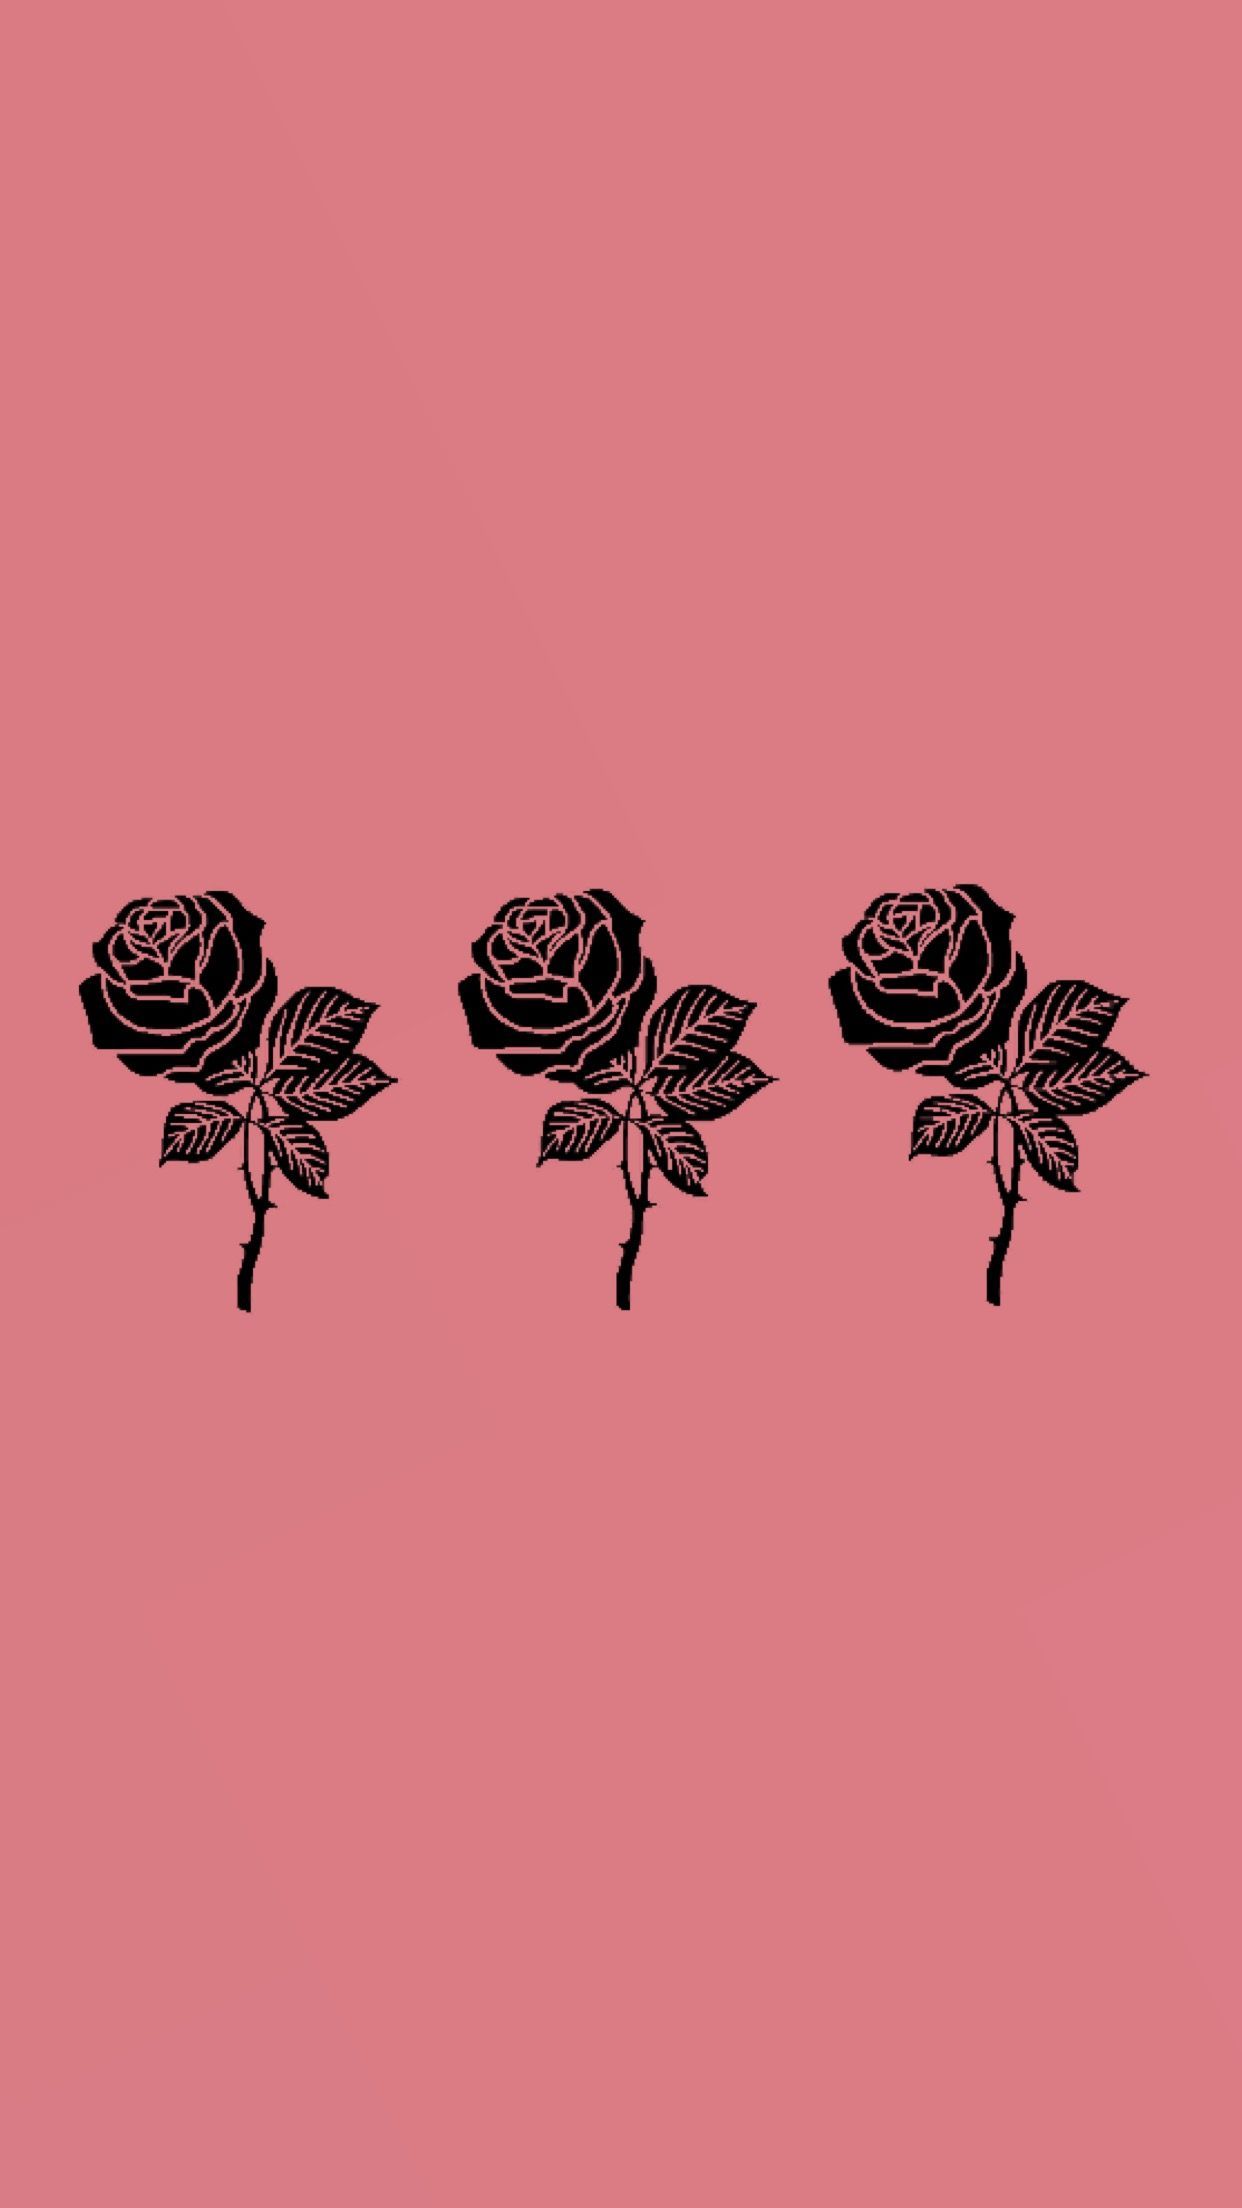 Roses wallpaper. made by Laurette. instagram